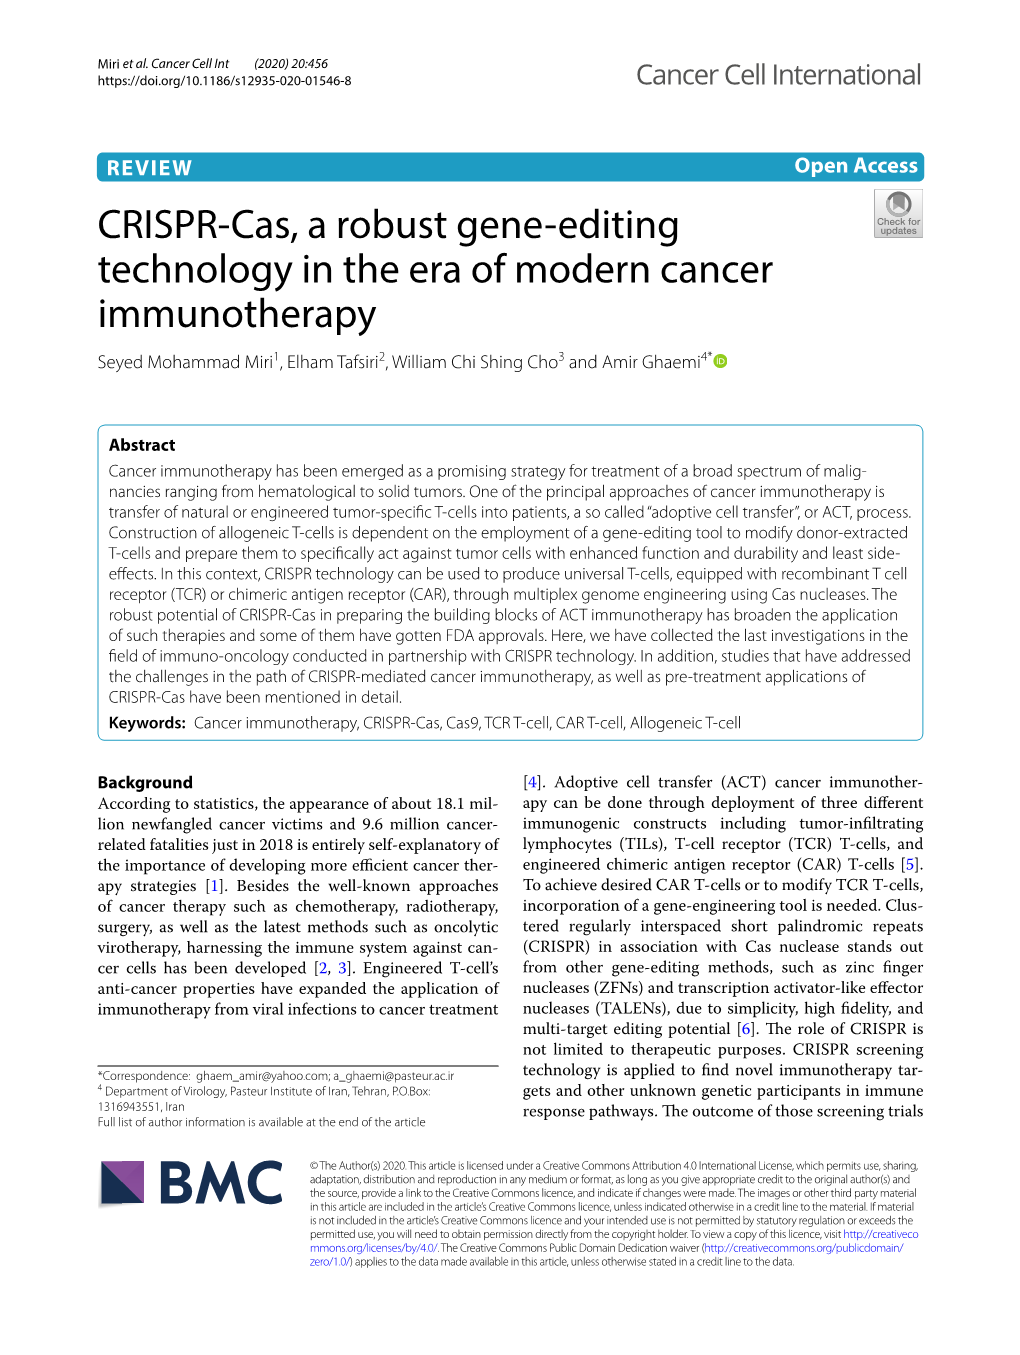 CRISPR-Cas, a Robust Gene-Editing Technology in the Era of Modern